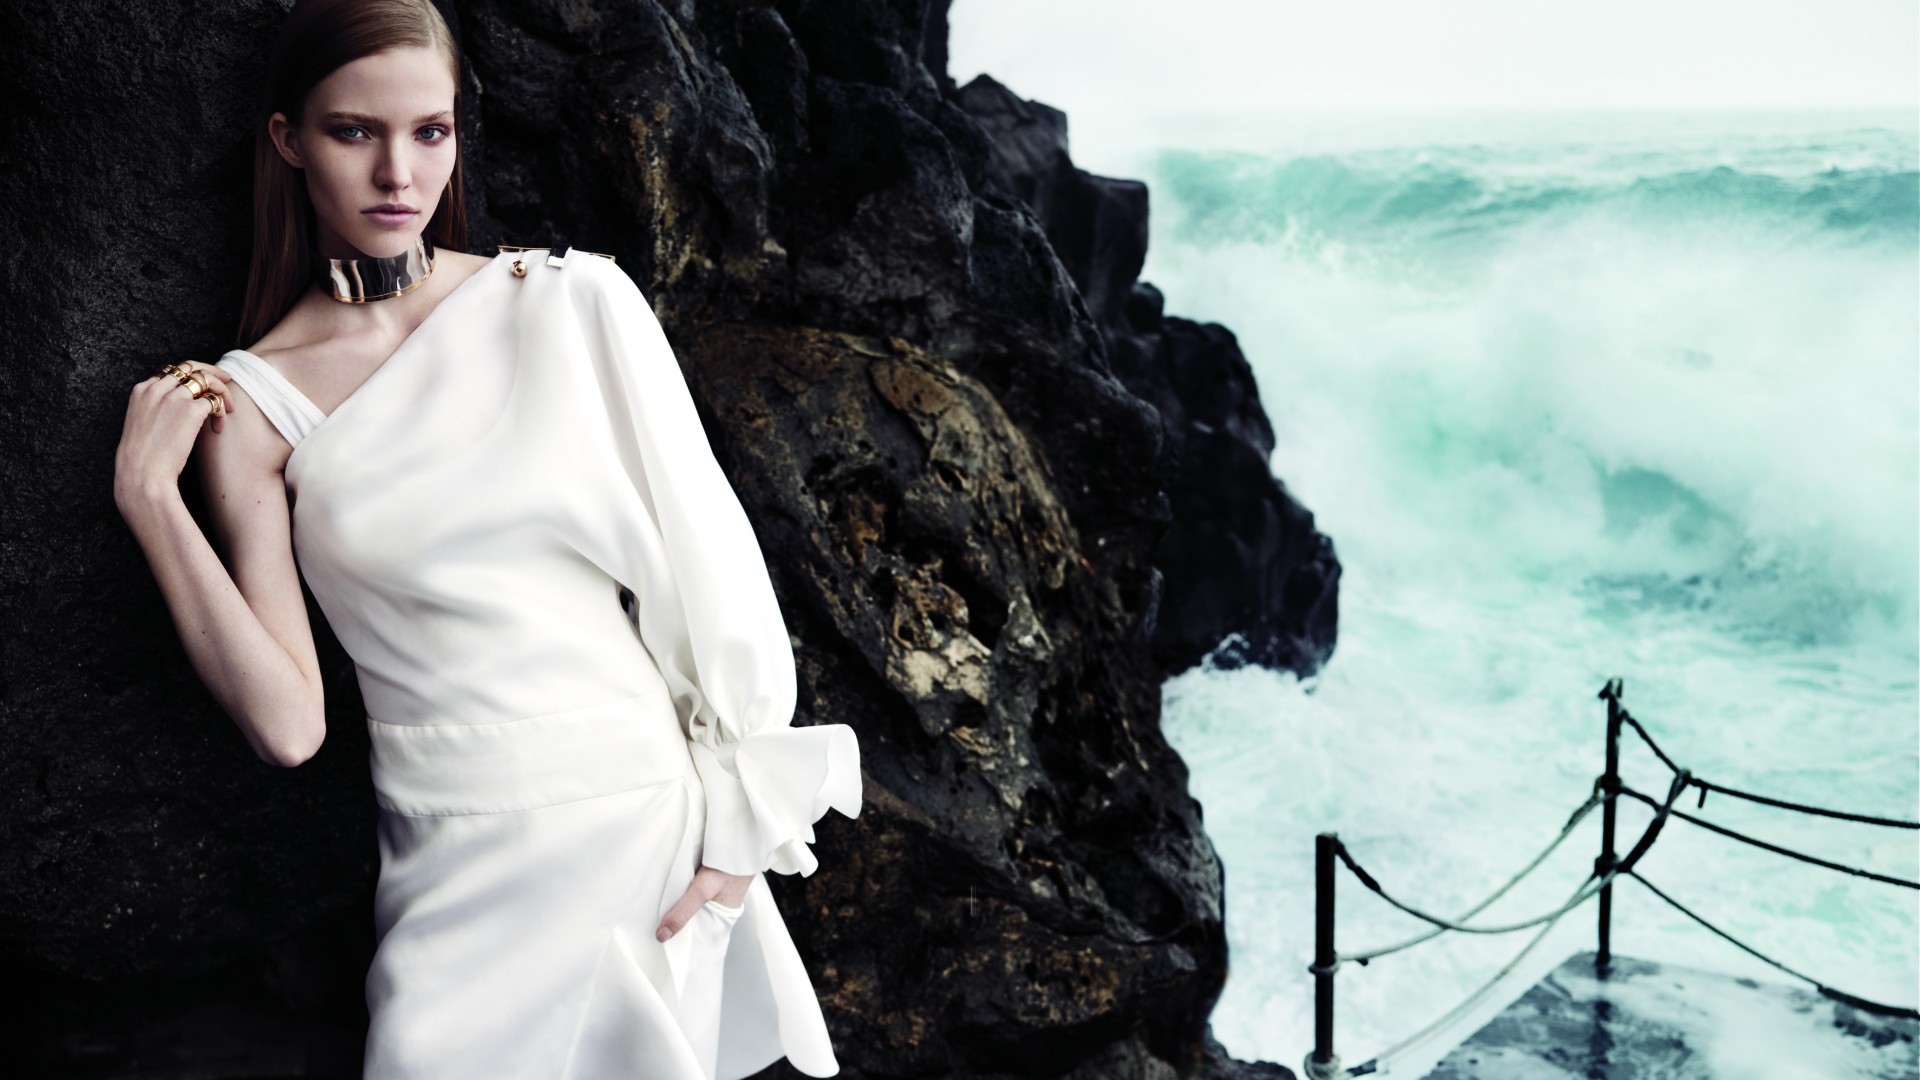 Sasha Luss, Top Fashion Models 2015, model, beach, white dress, sea, ocean,  (horizontal)